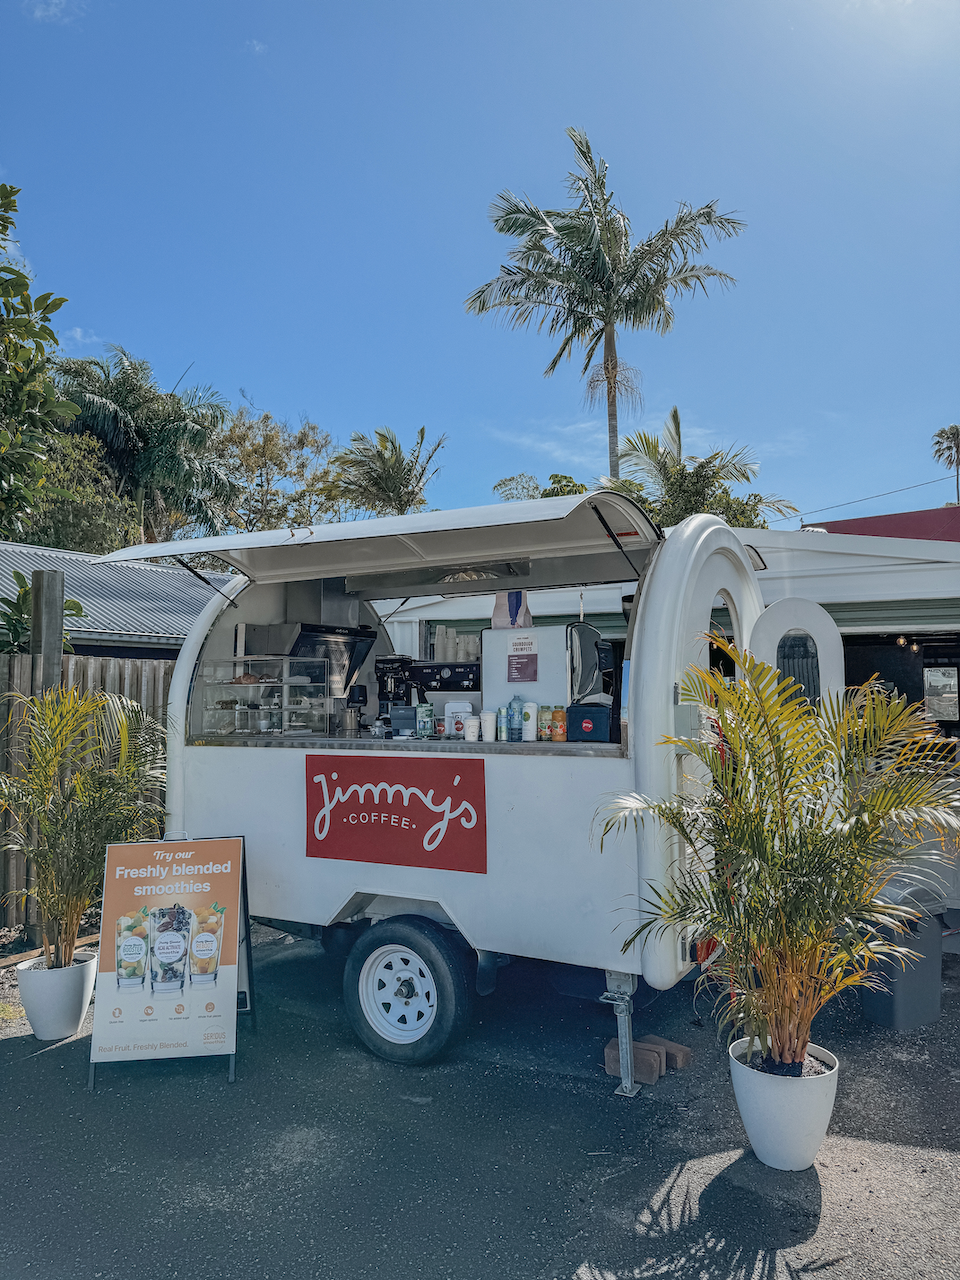 Le petit food truck de Jimmy's Coffee - Byron Bay - New South Wales - Australie